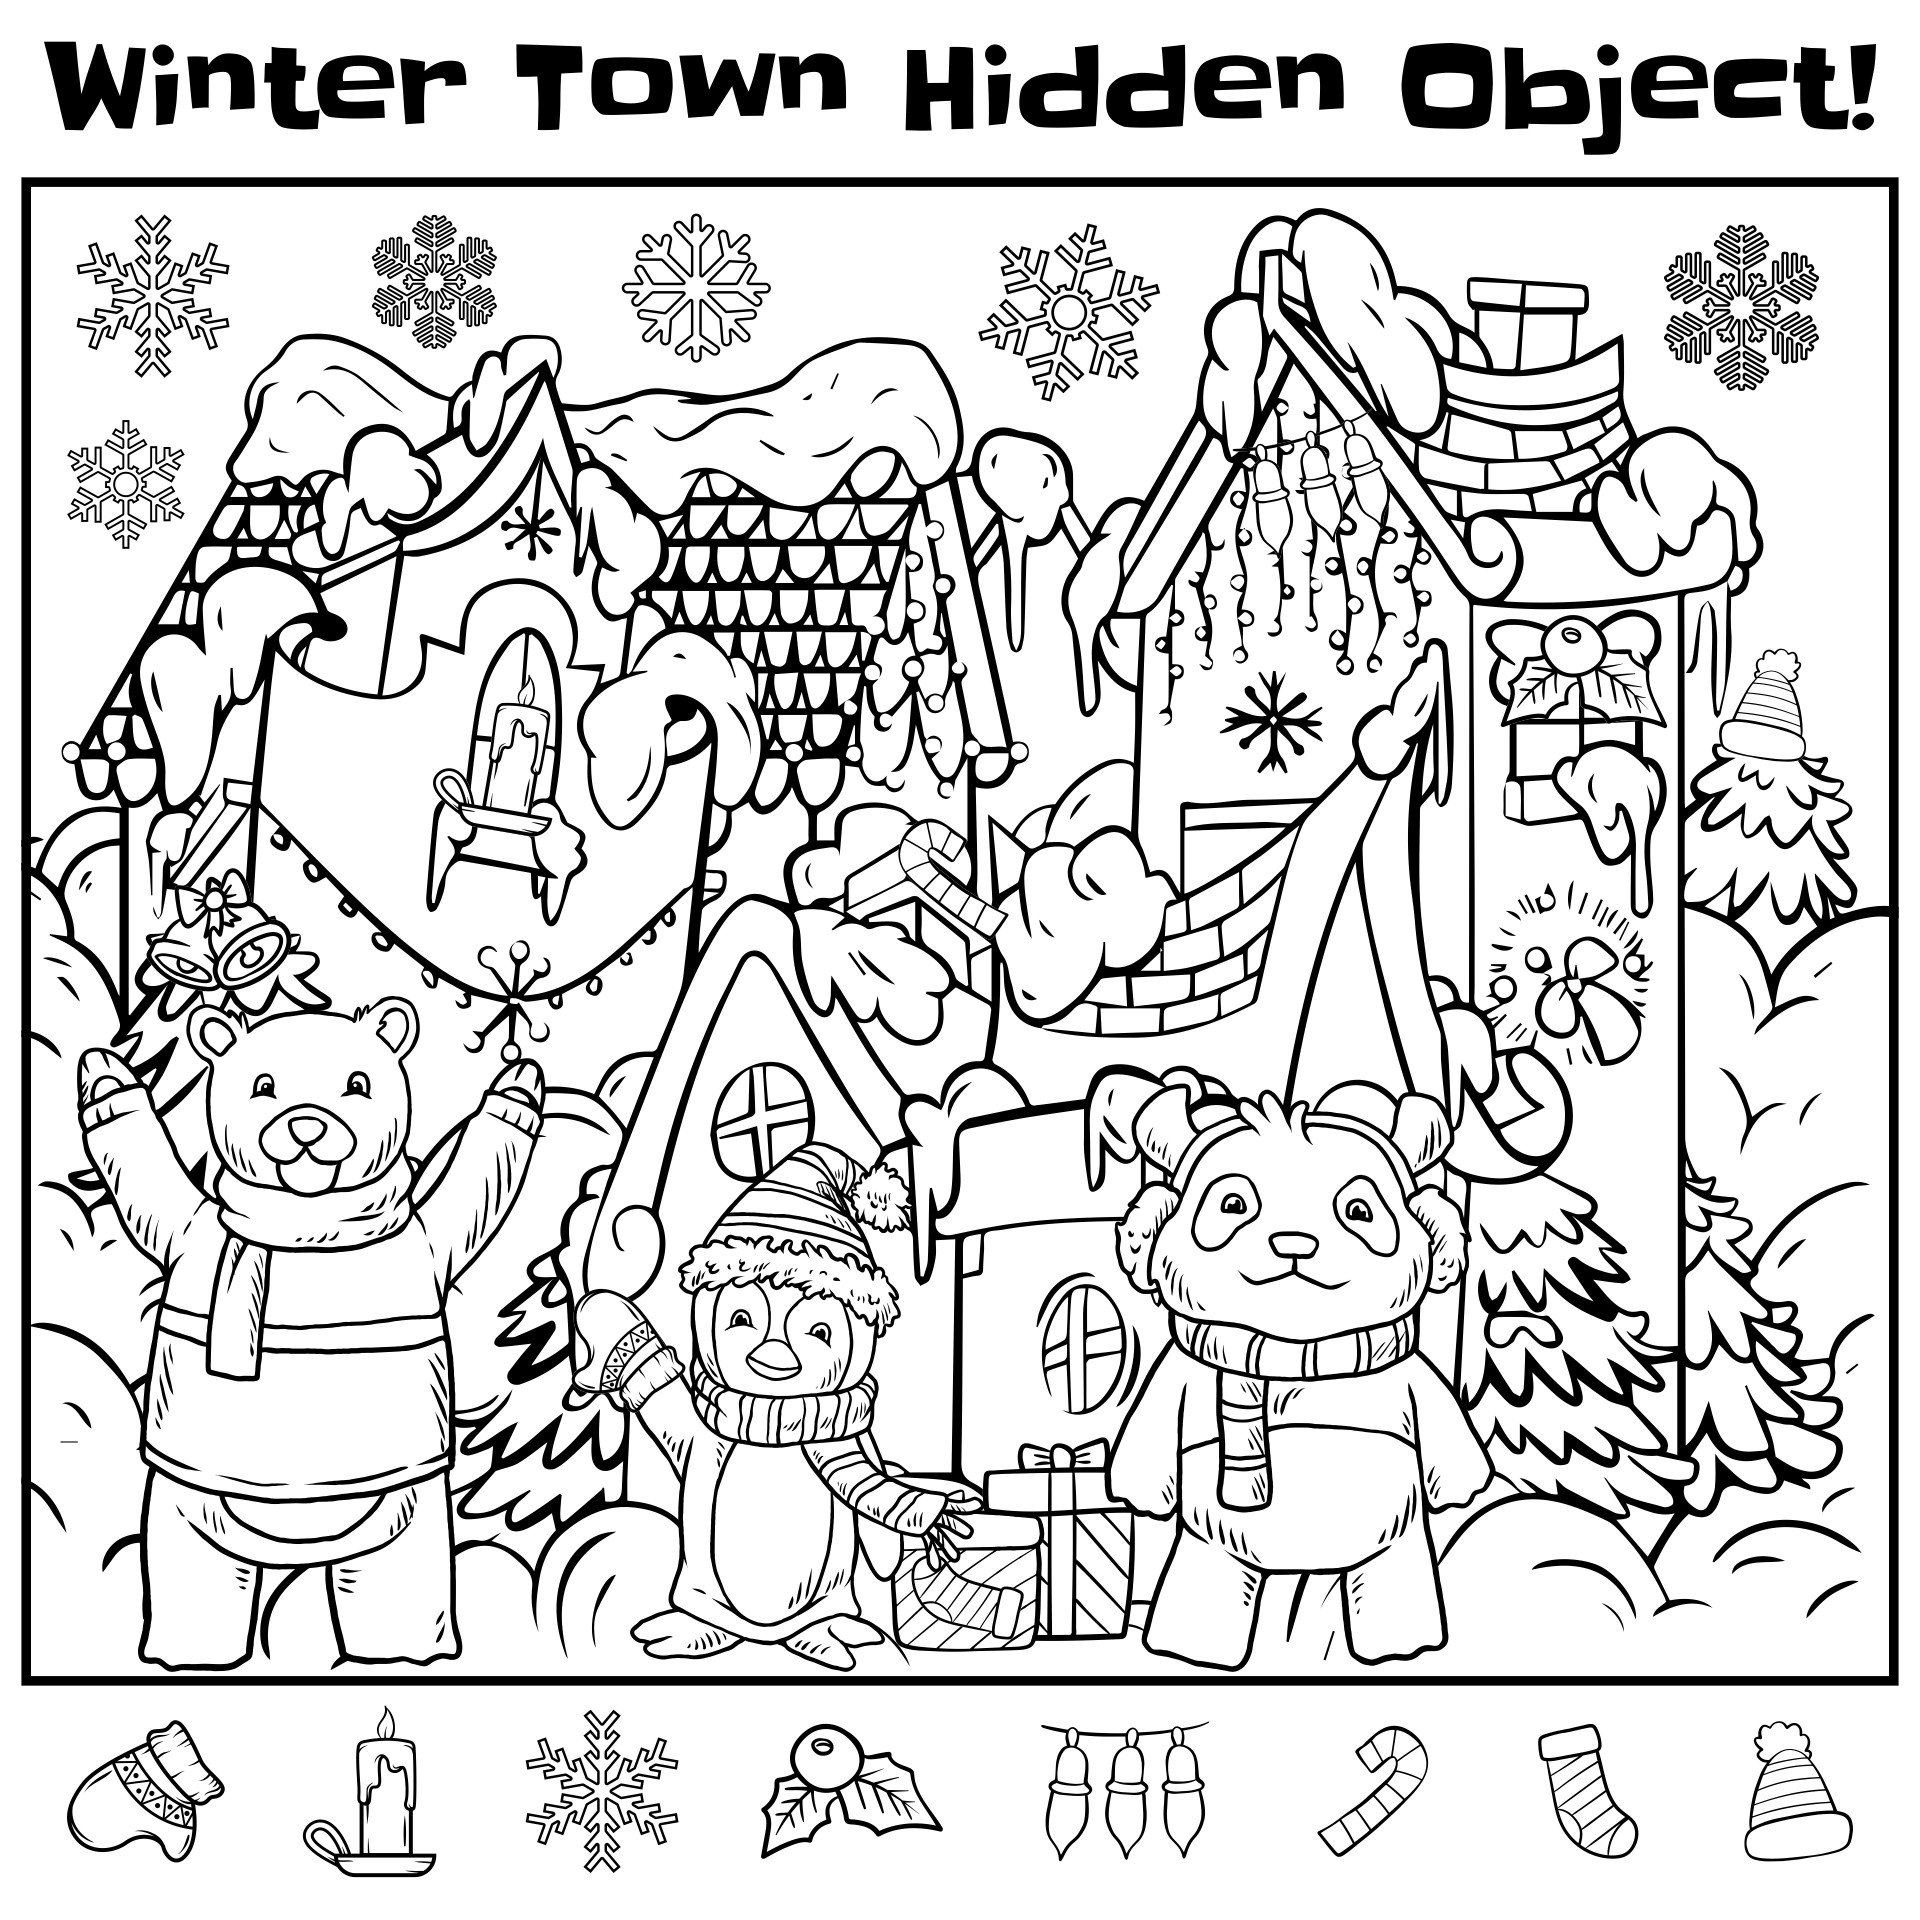 Winter Hidden Objects Printables